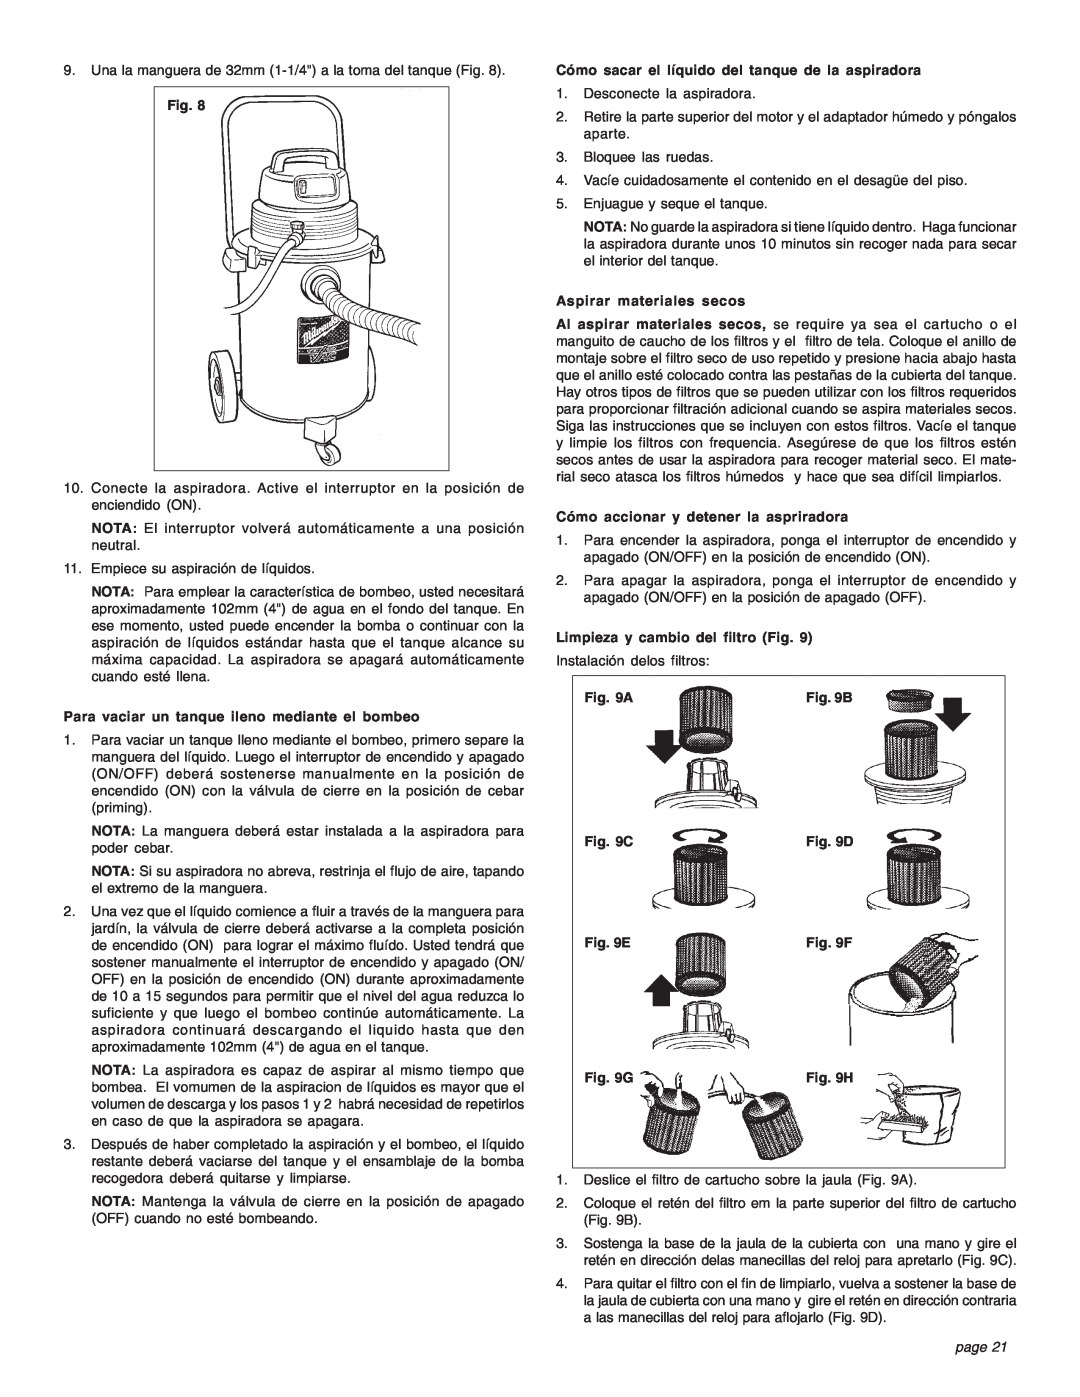 Intec 8940-20 manual page 